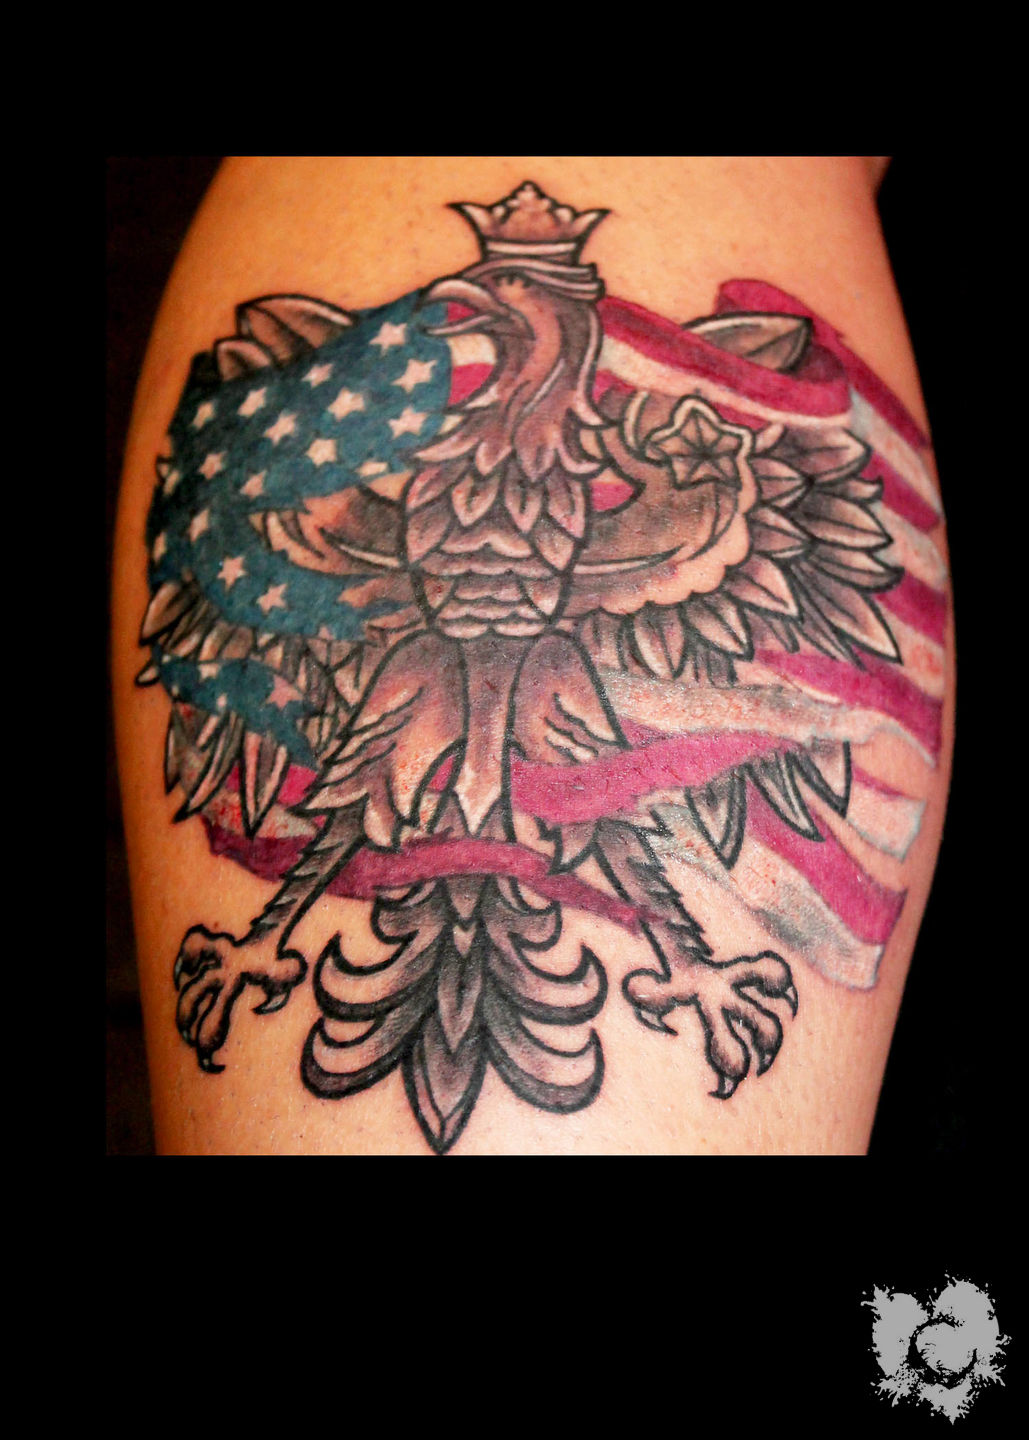 polish flag tattoo